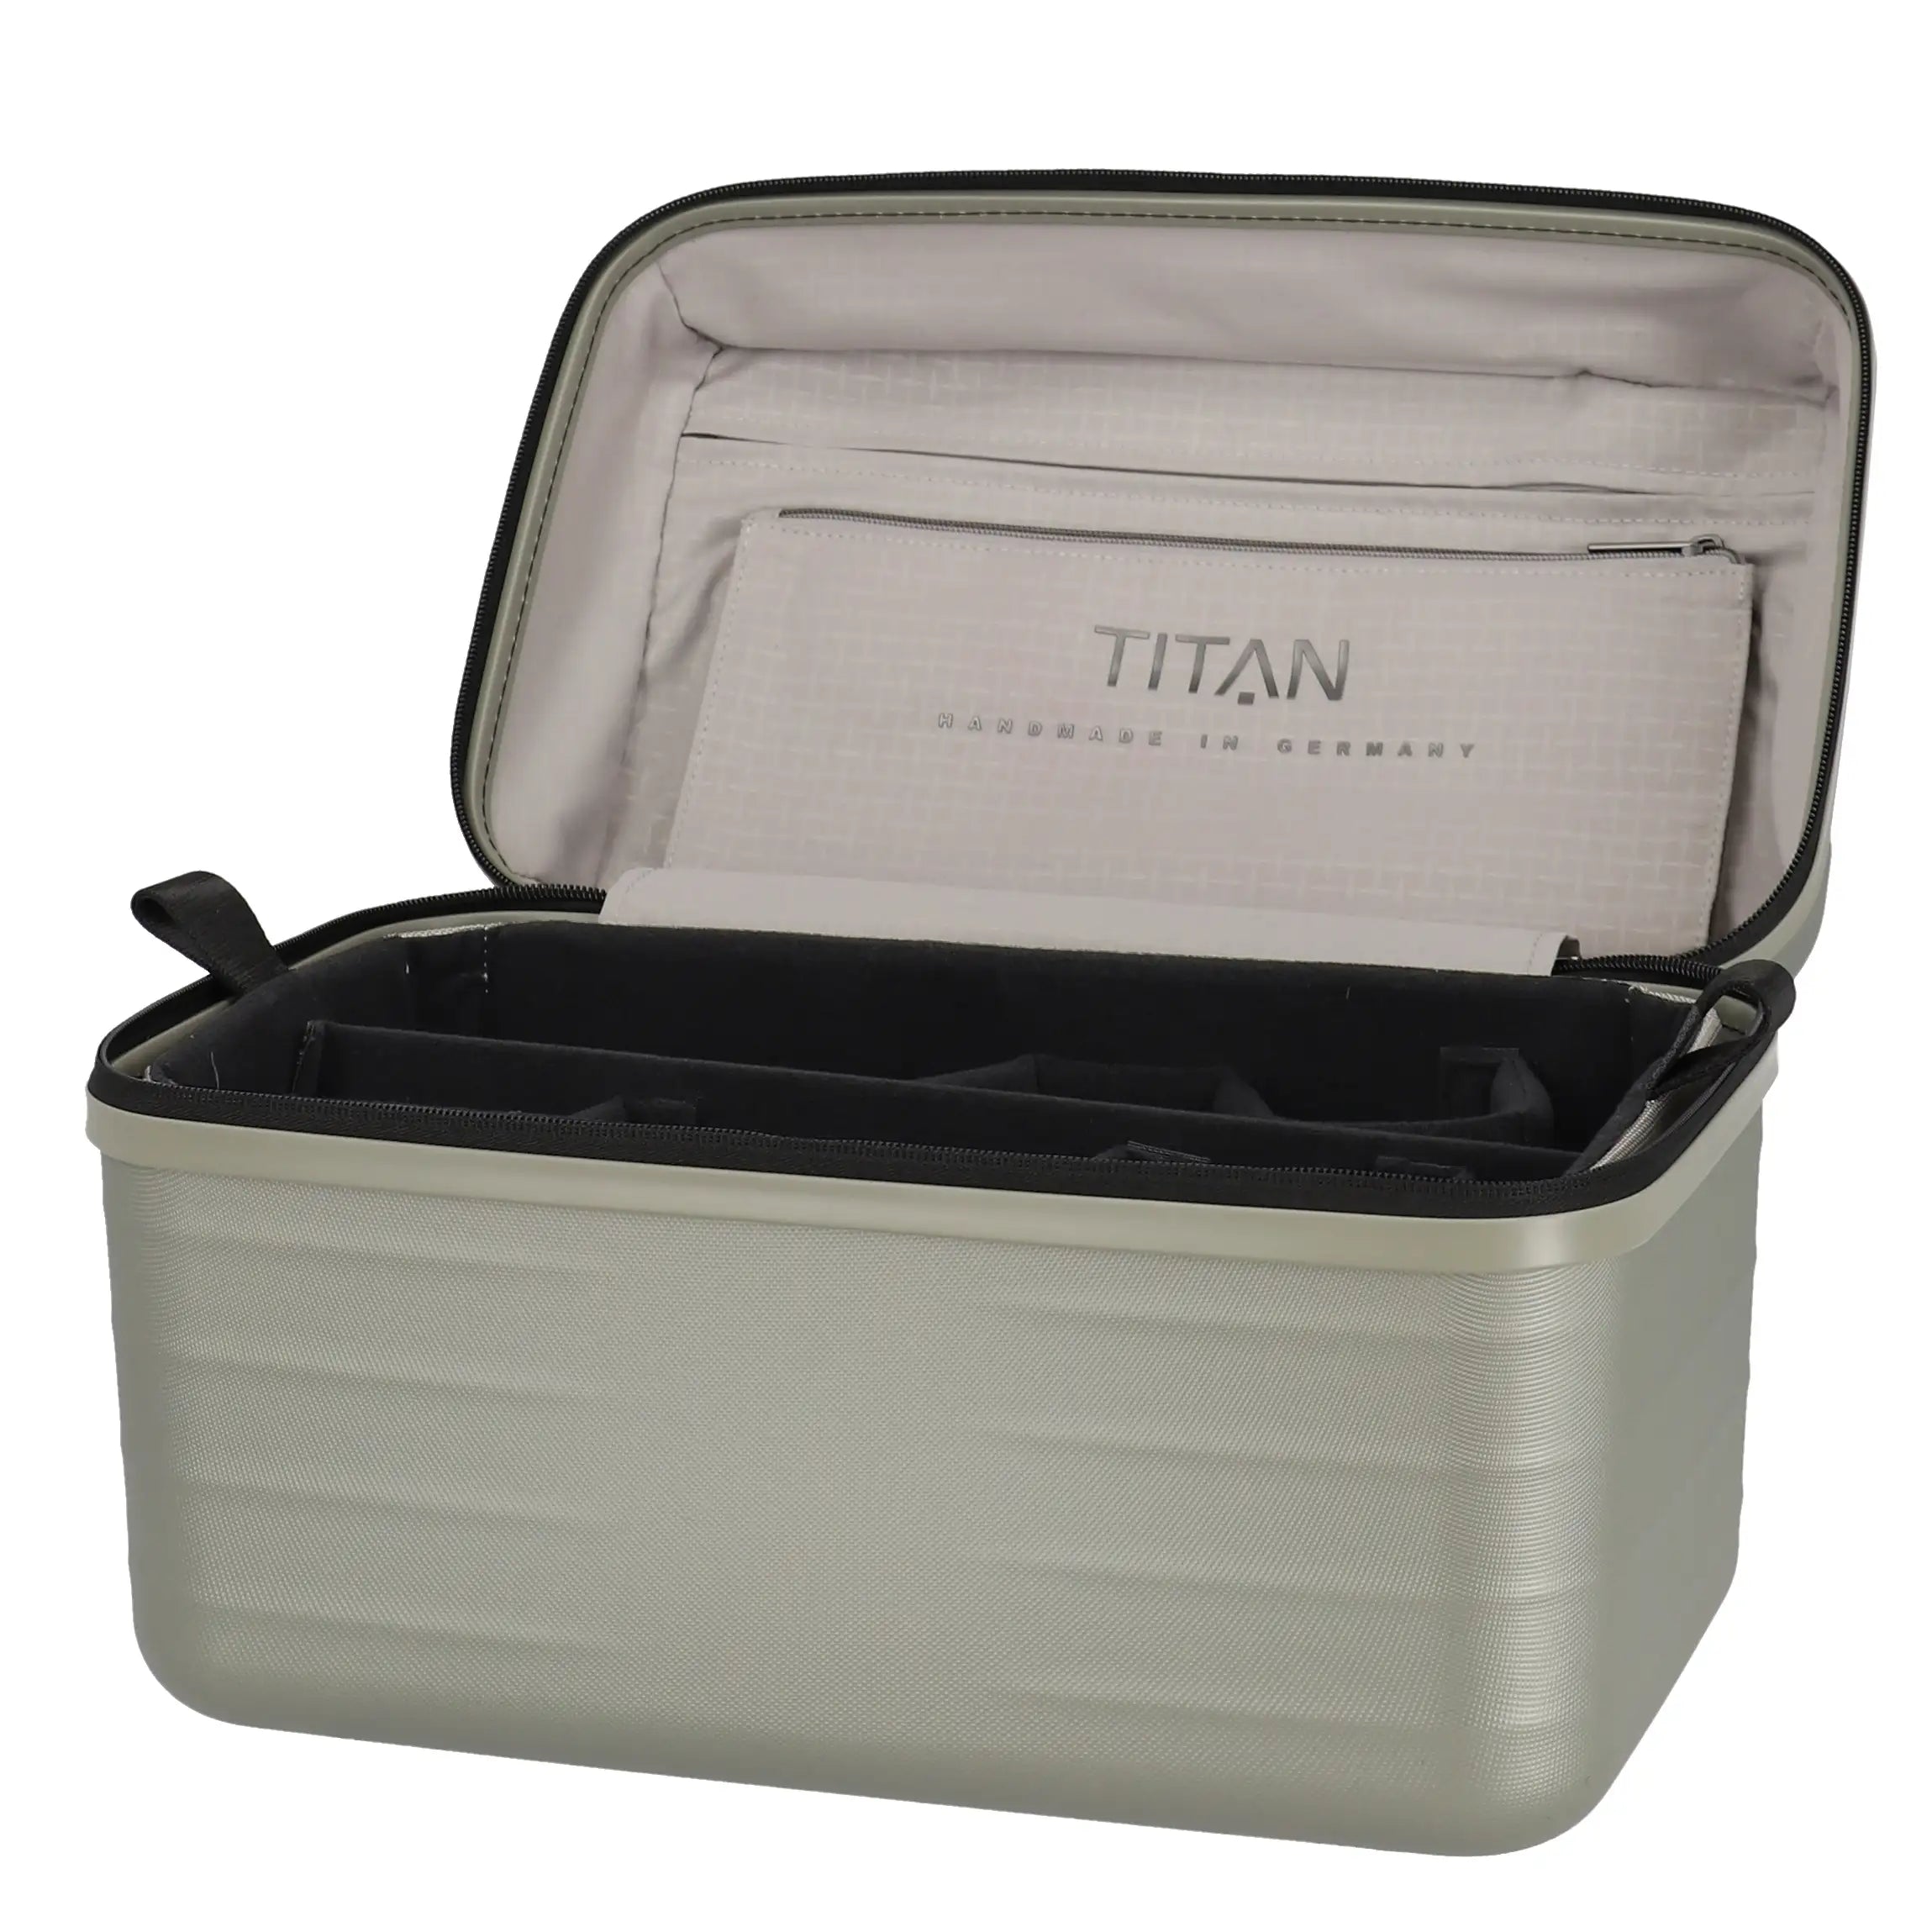 Titan Litron Beautycase - Champagne